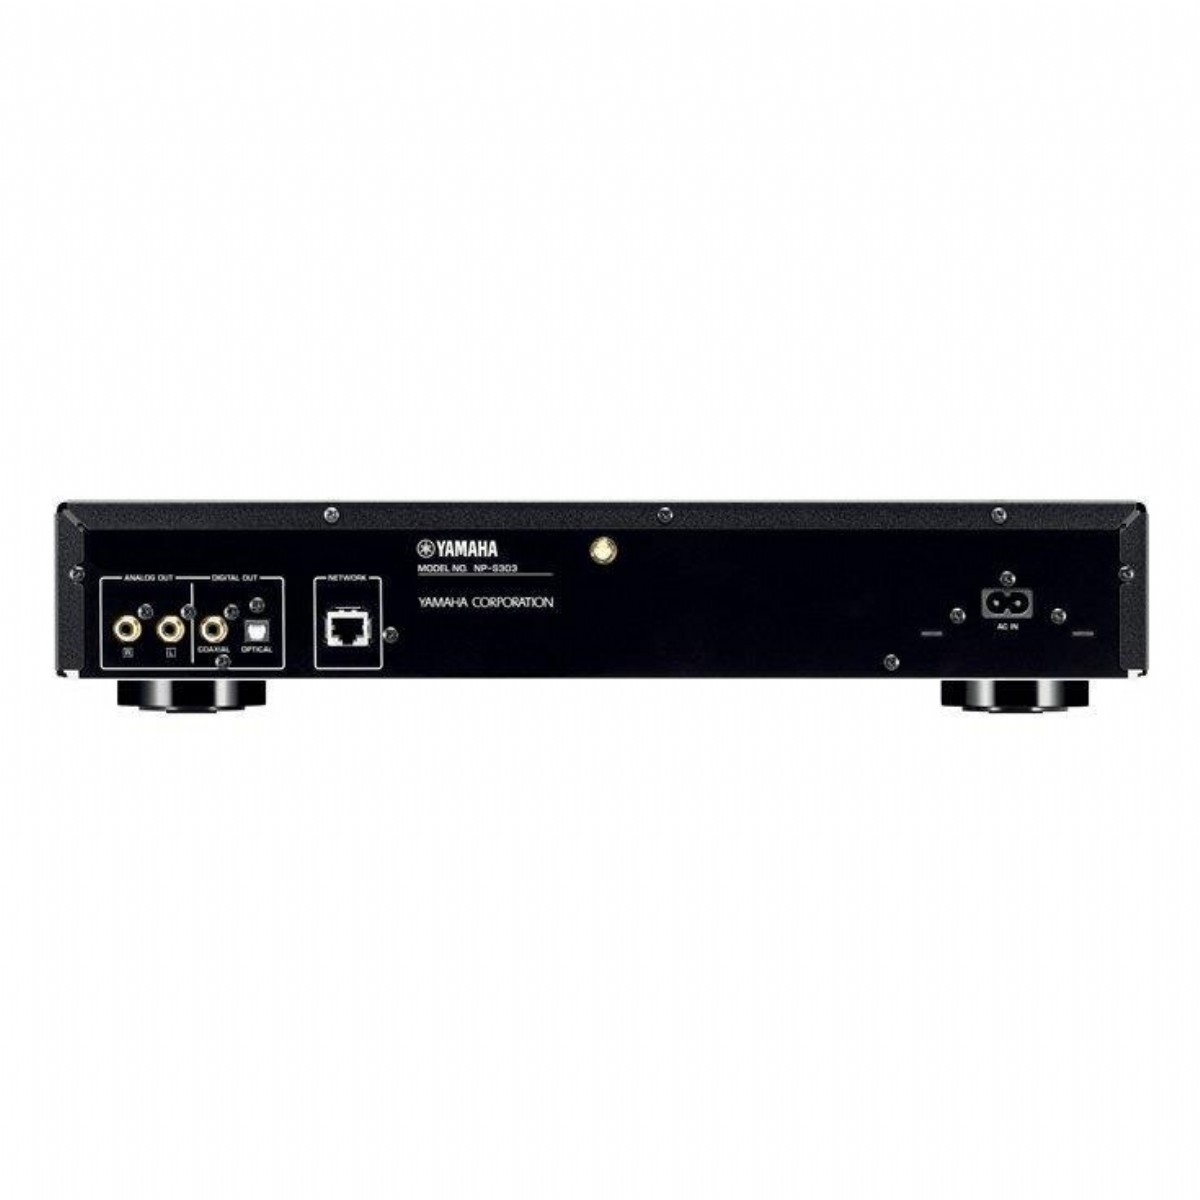 Network Sistemler | Yamaha NP S303 Musiccast Network Player | nps303 | Yamaha NP S303 Musiccast Network Player,Yamaha NP S303,NP S303 Network Player,Yamaha,Akusta hifi | 